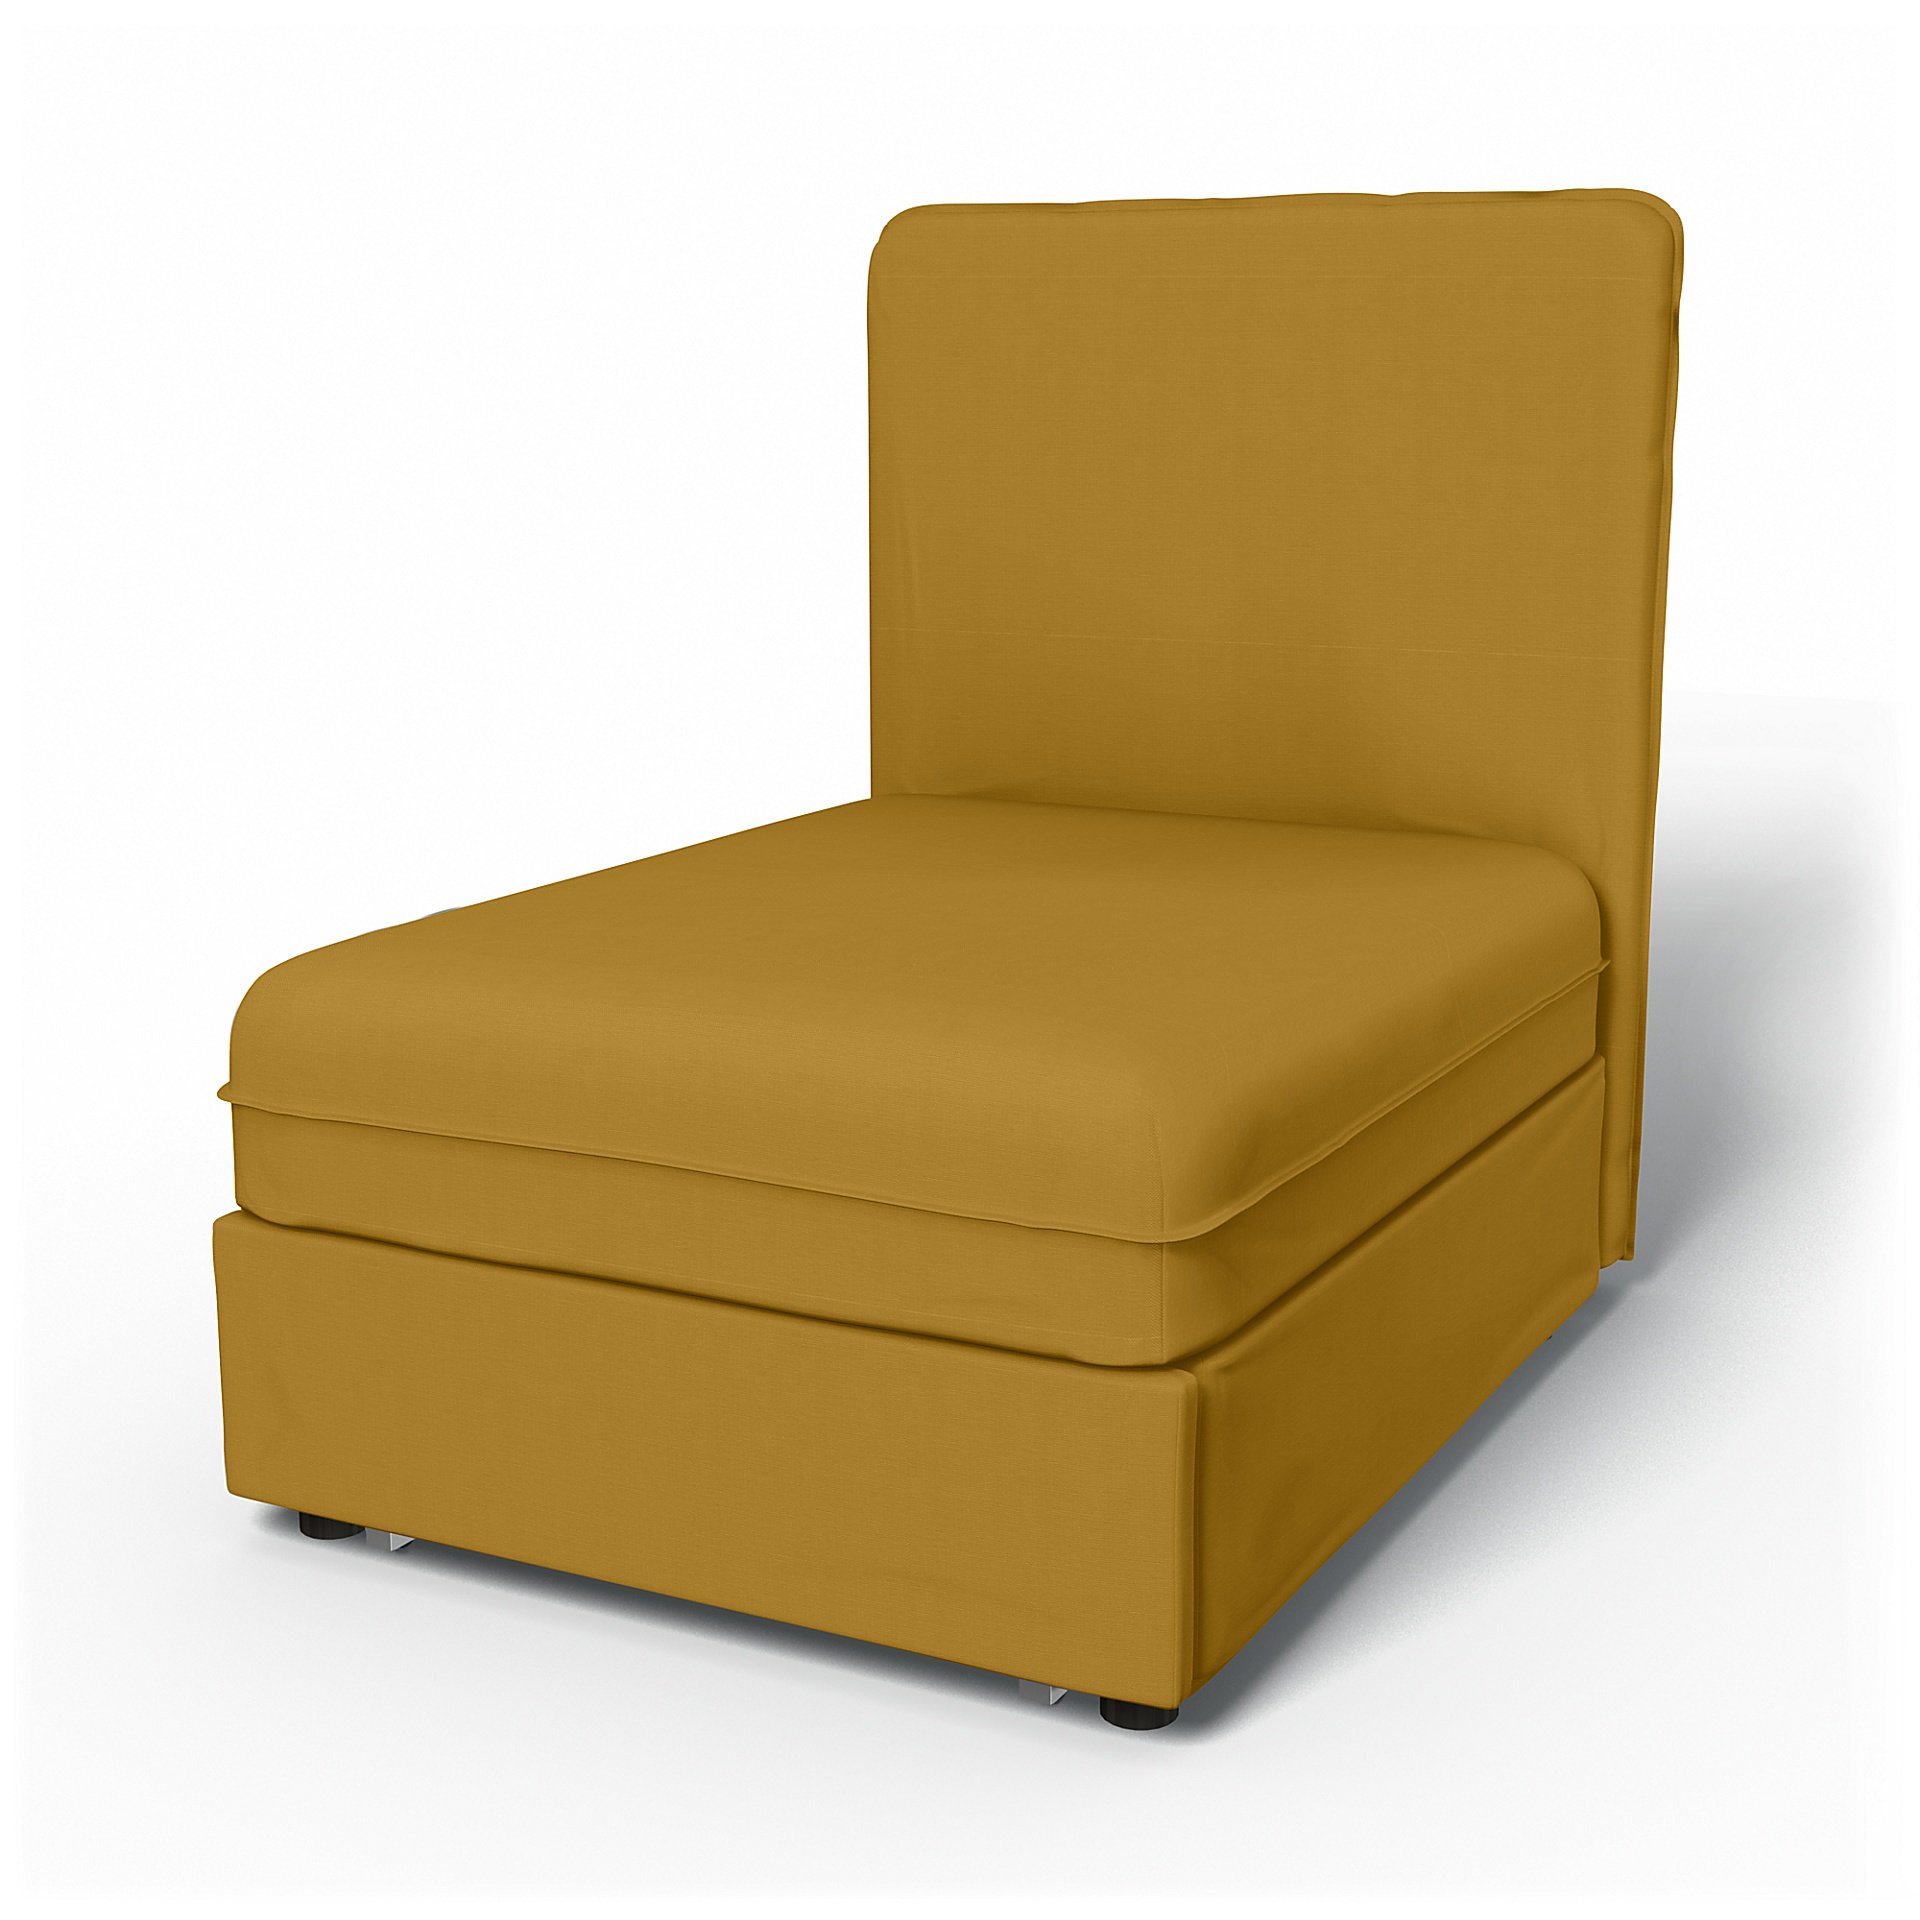 IKEA - Vallentuna Seat Module with High Back Sofa Bed Cover (80x100x46cm), Honey Mustard, Cotton - B